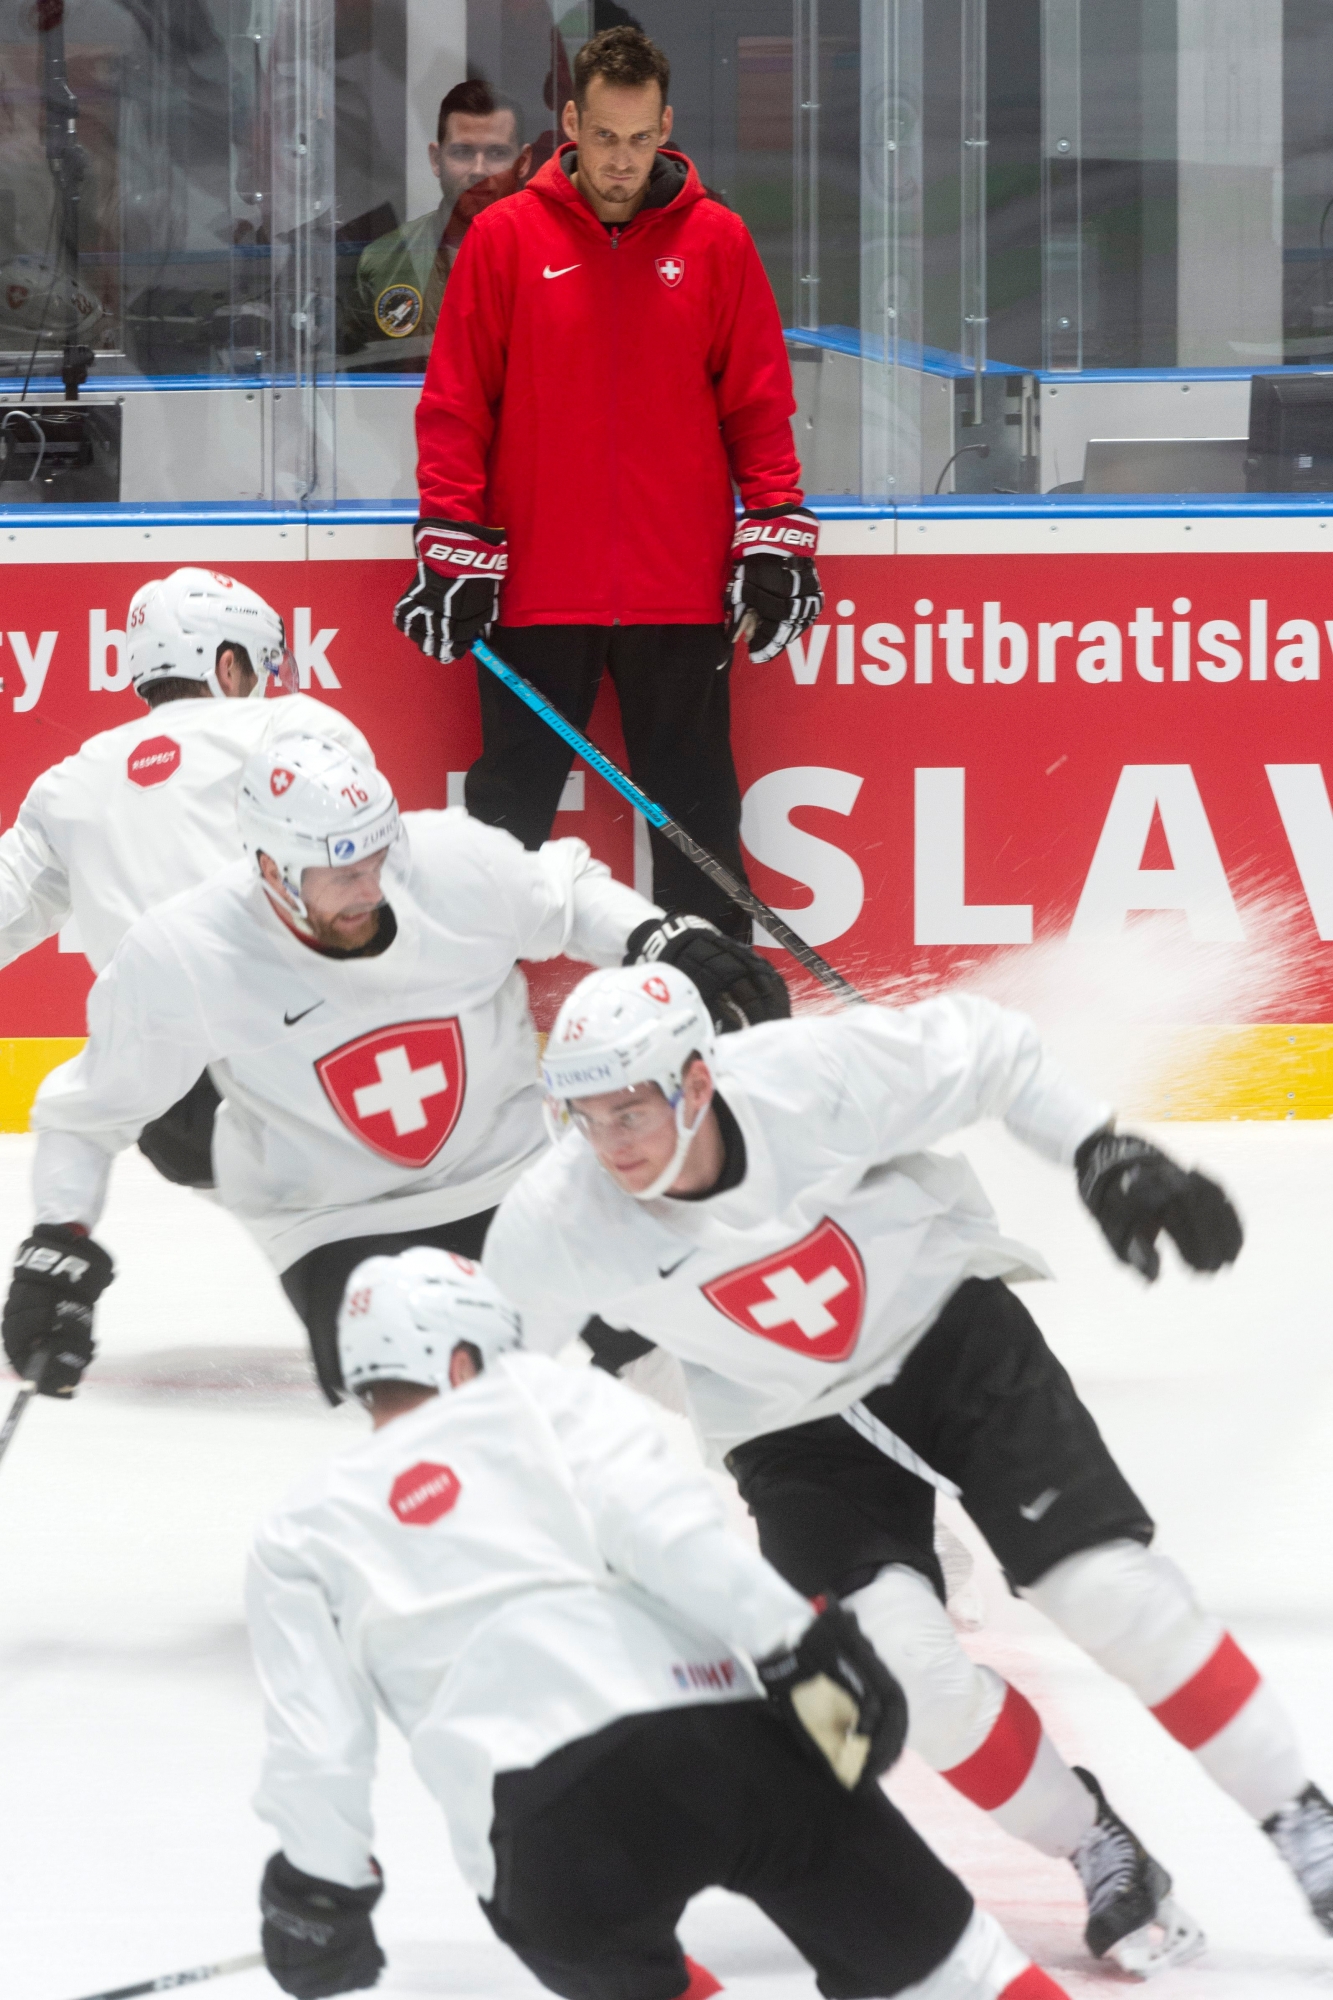 Switzerland's coach Patrick Fischer during a training session of the Swiss team at the IIHF 2019 World Ice Hockey Championships, at the Ondrej Nepela Arena in Bratislava, Slovakia, on Thursday, May 9, 2019. (KEYSTONE/Melanie Duchene) SLOVAKIA ICE HOCKEY WORLD CHAMPIONSHIPS 2019